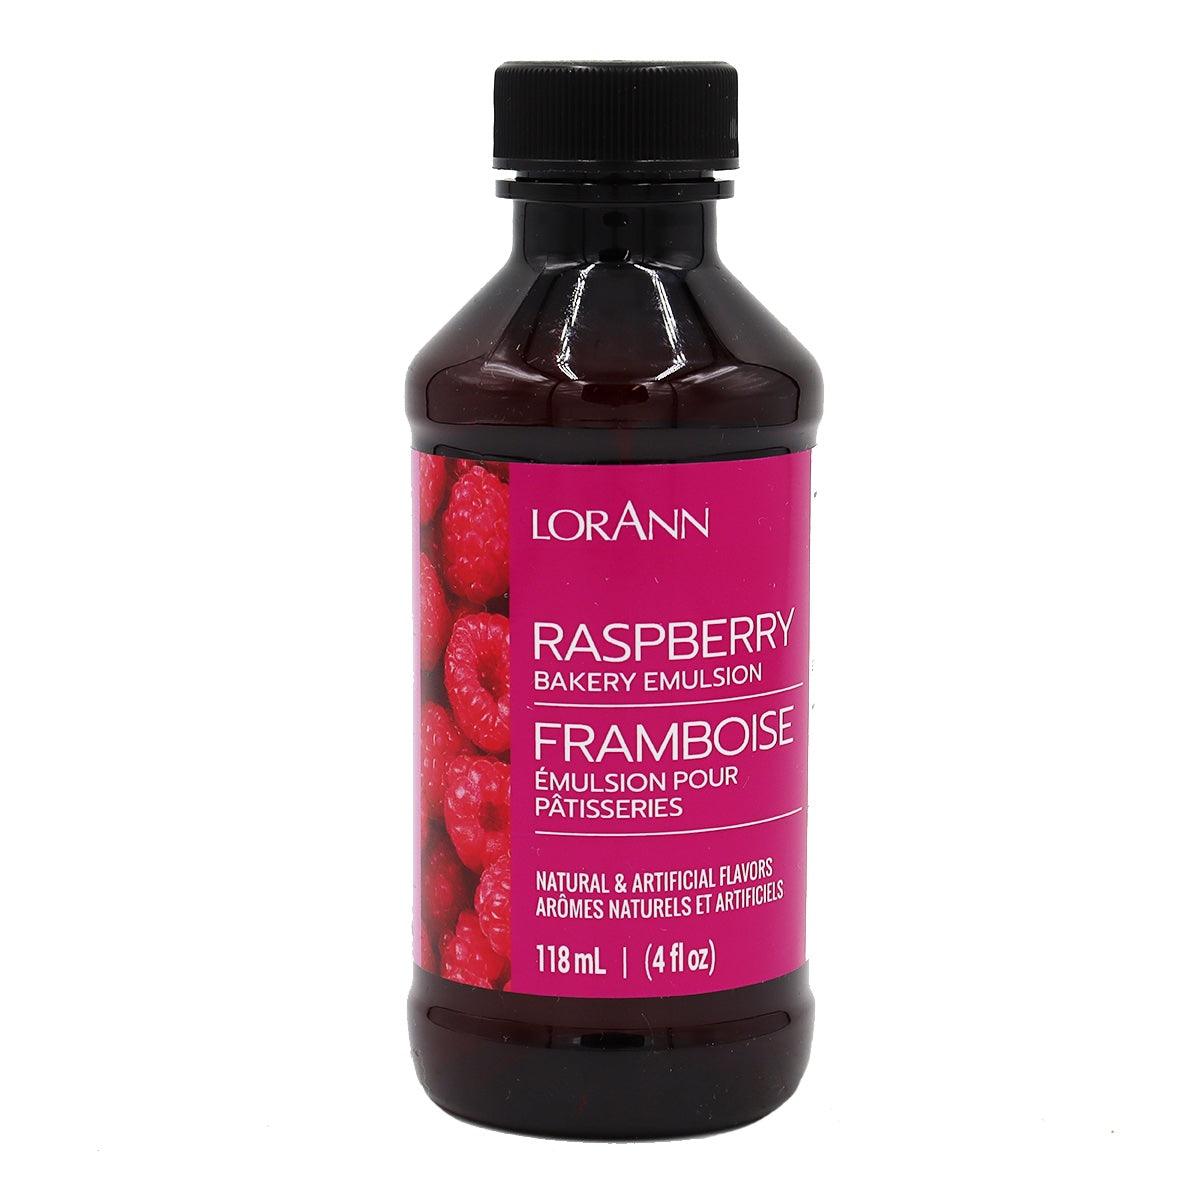 Raspberry Emulsion 4 fl oz (118ml) - ViaCheff.com